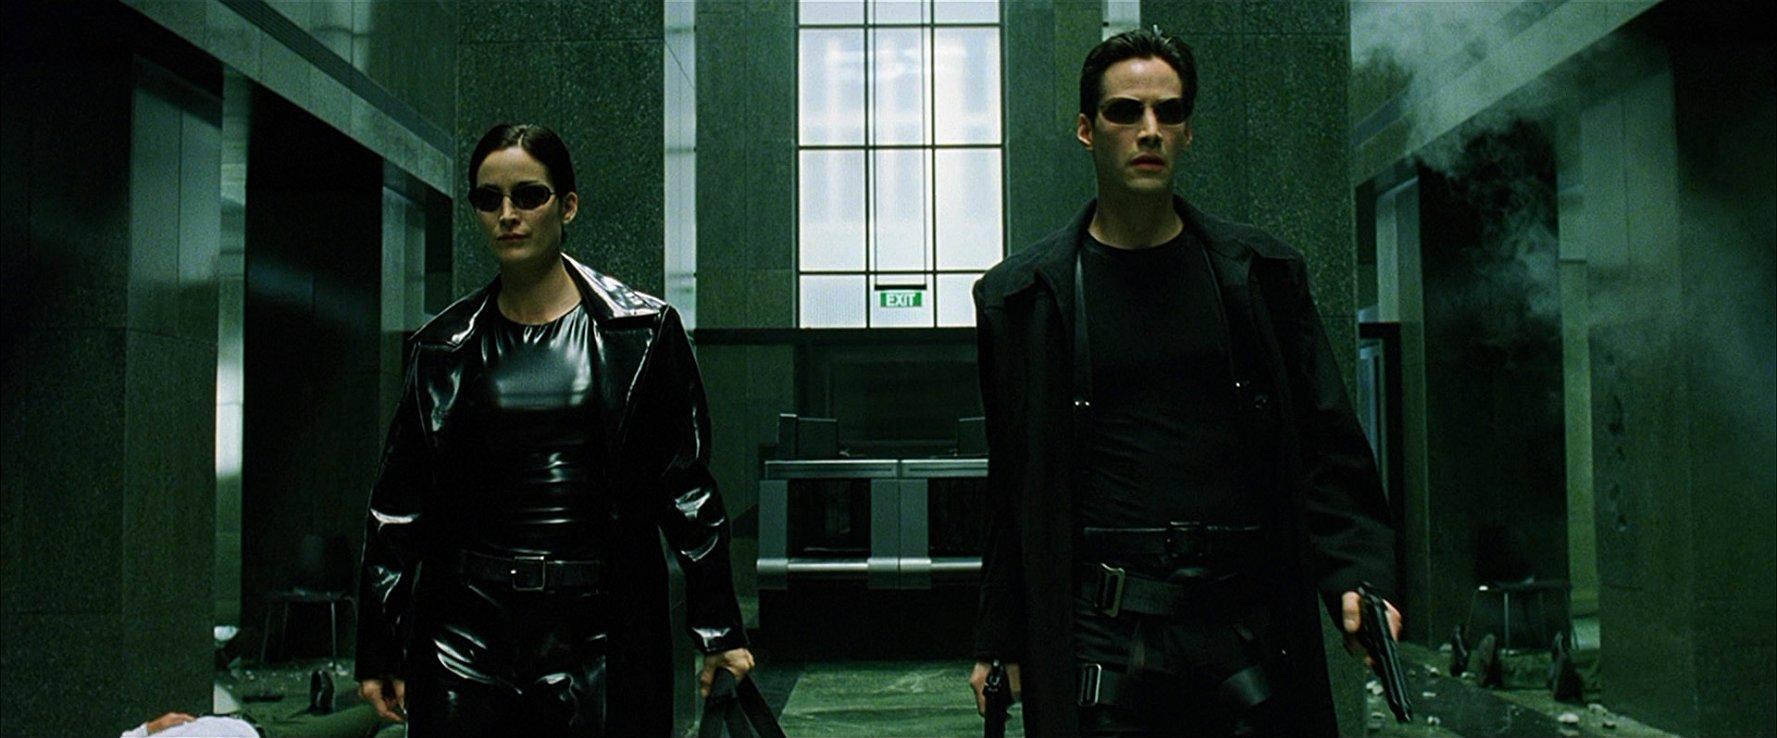 Keanu Reeves och Carrie-Anne Moss i ”The Matrix” från 1999.